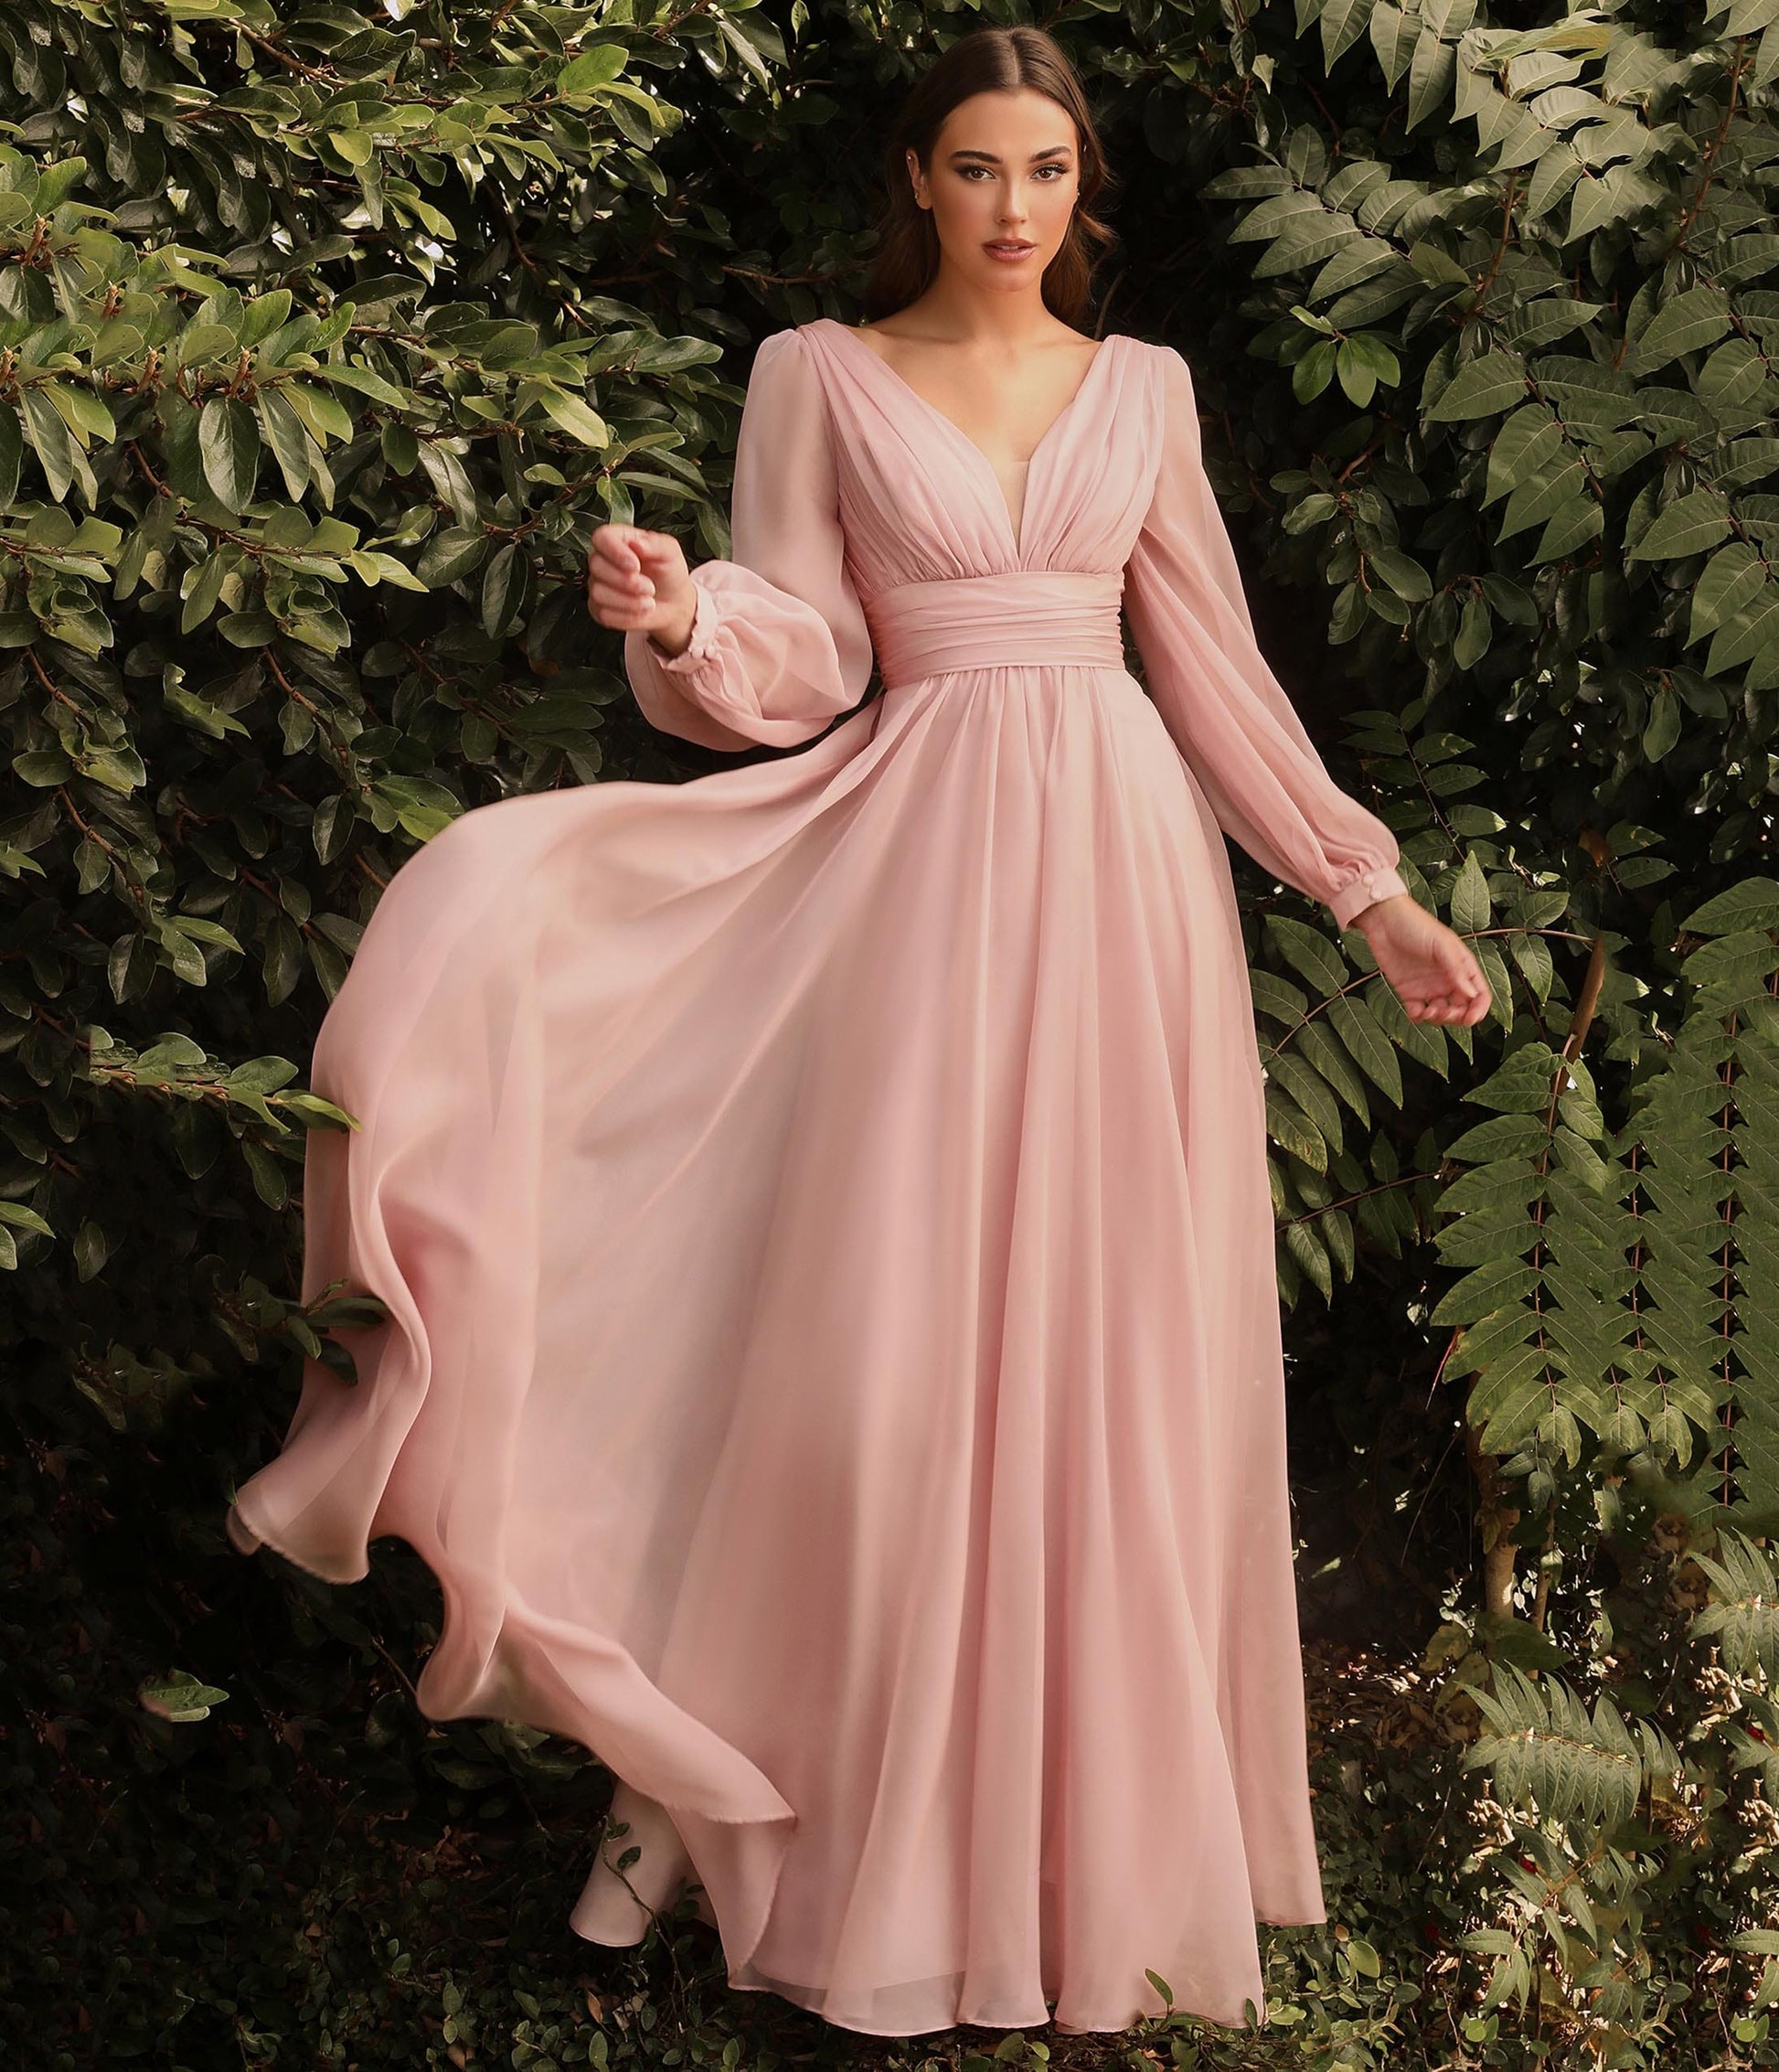 Blush Pink Chiffon Sleeve Prom Goddess Gown